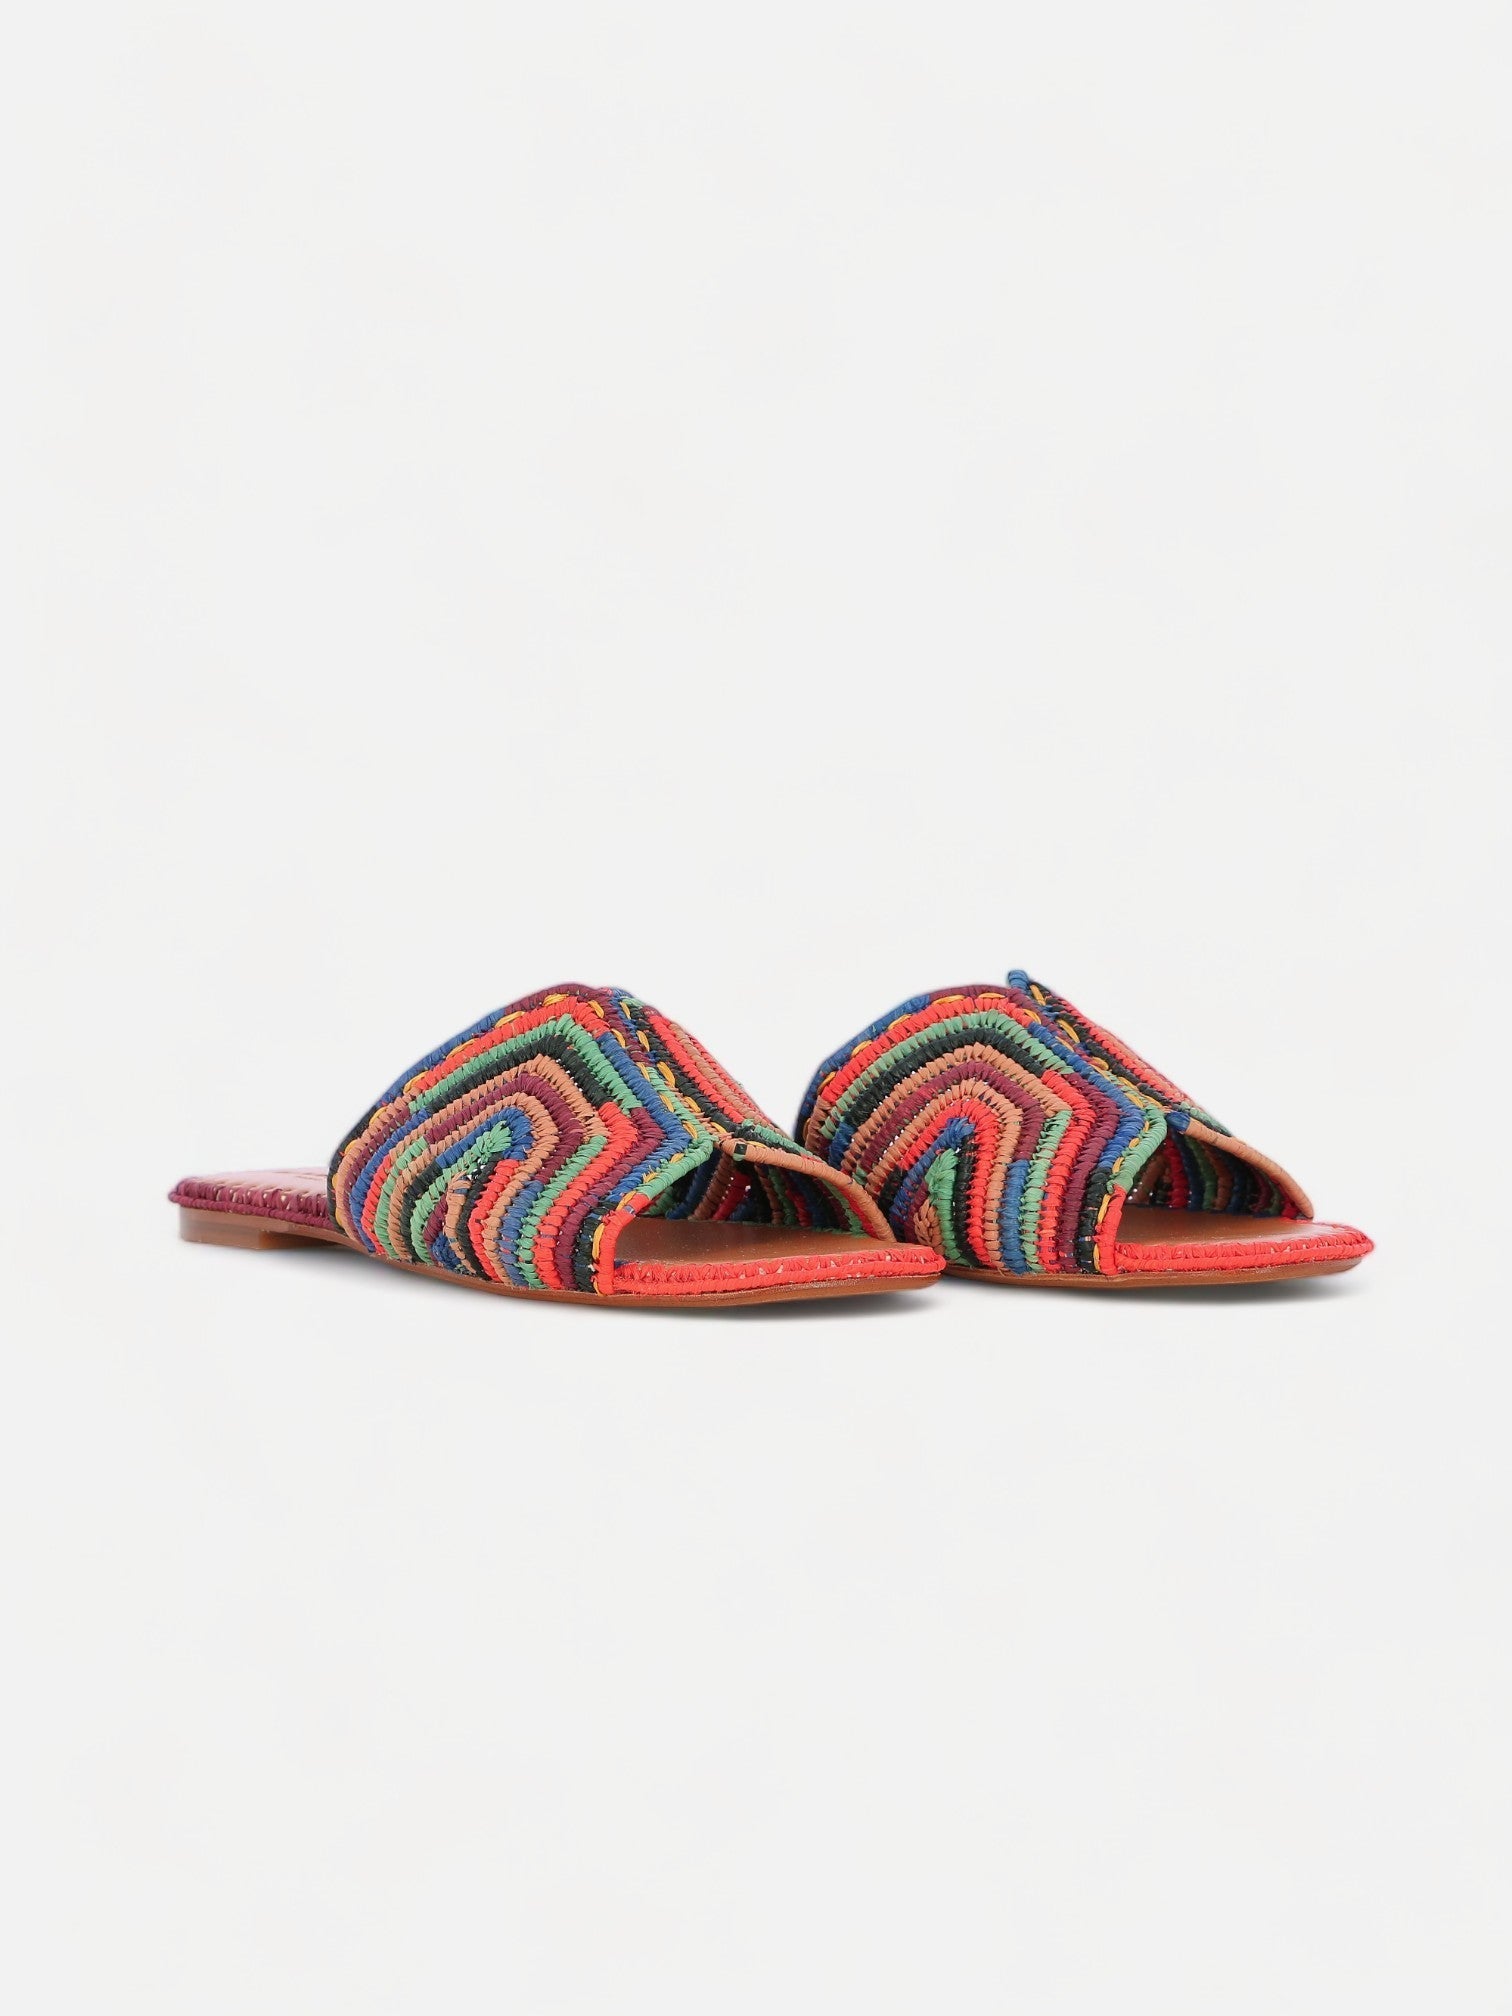 SANDALS - INENI sandals, multicolor raffia - Clergerie Paris - USA